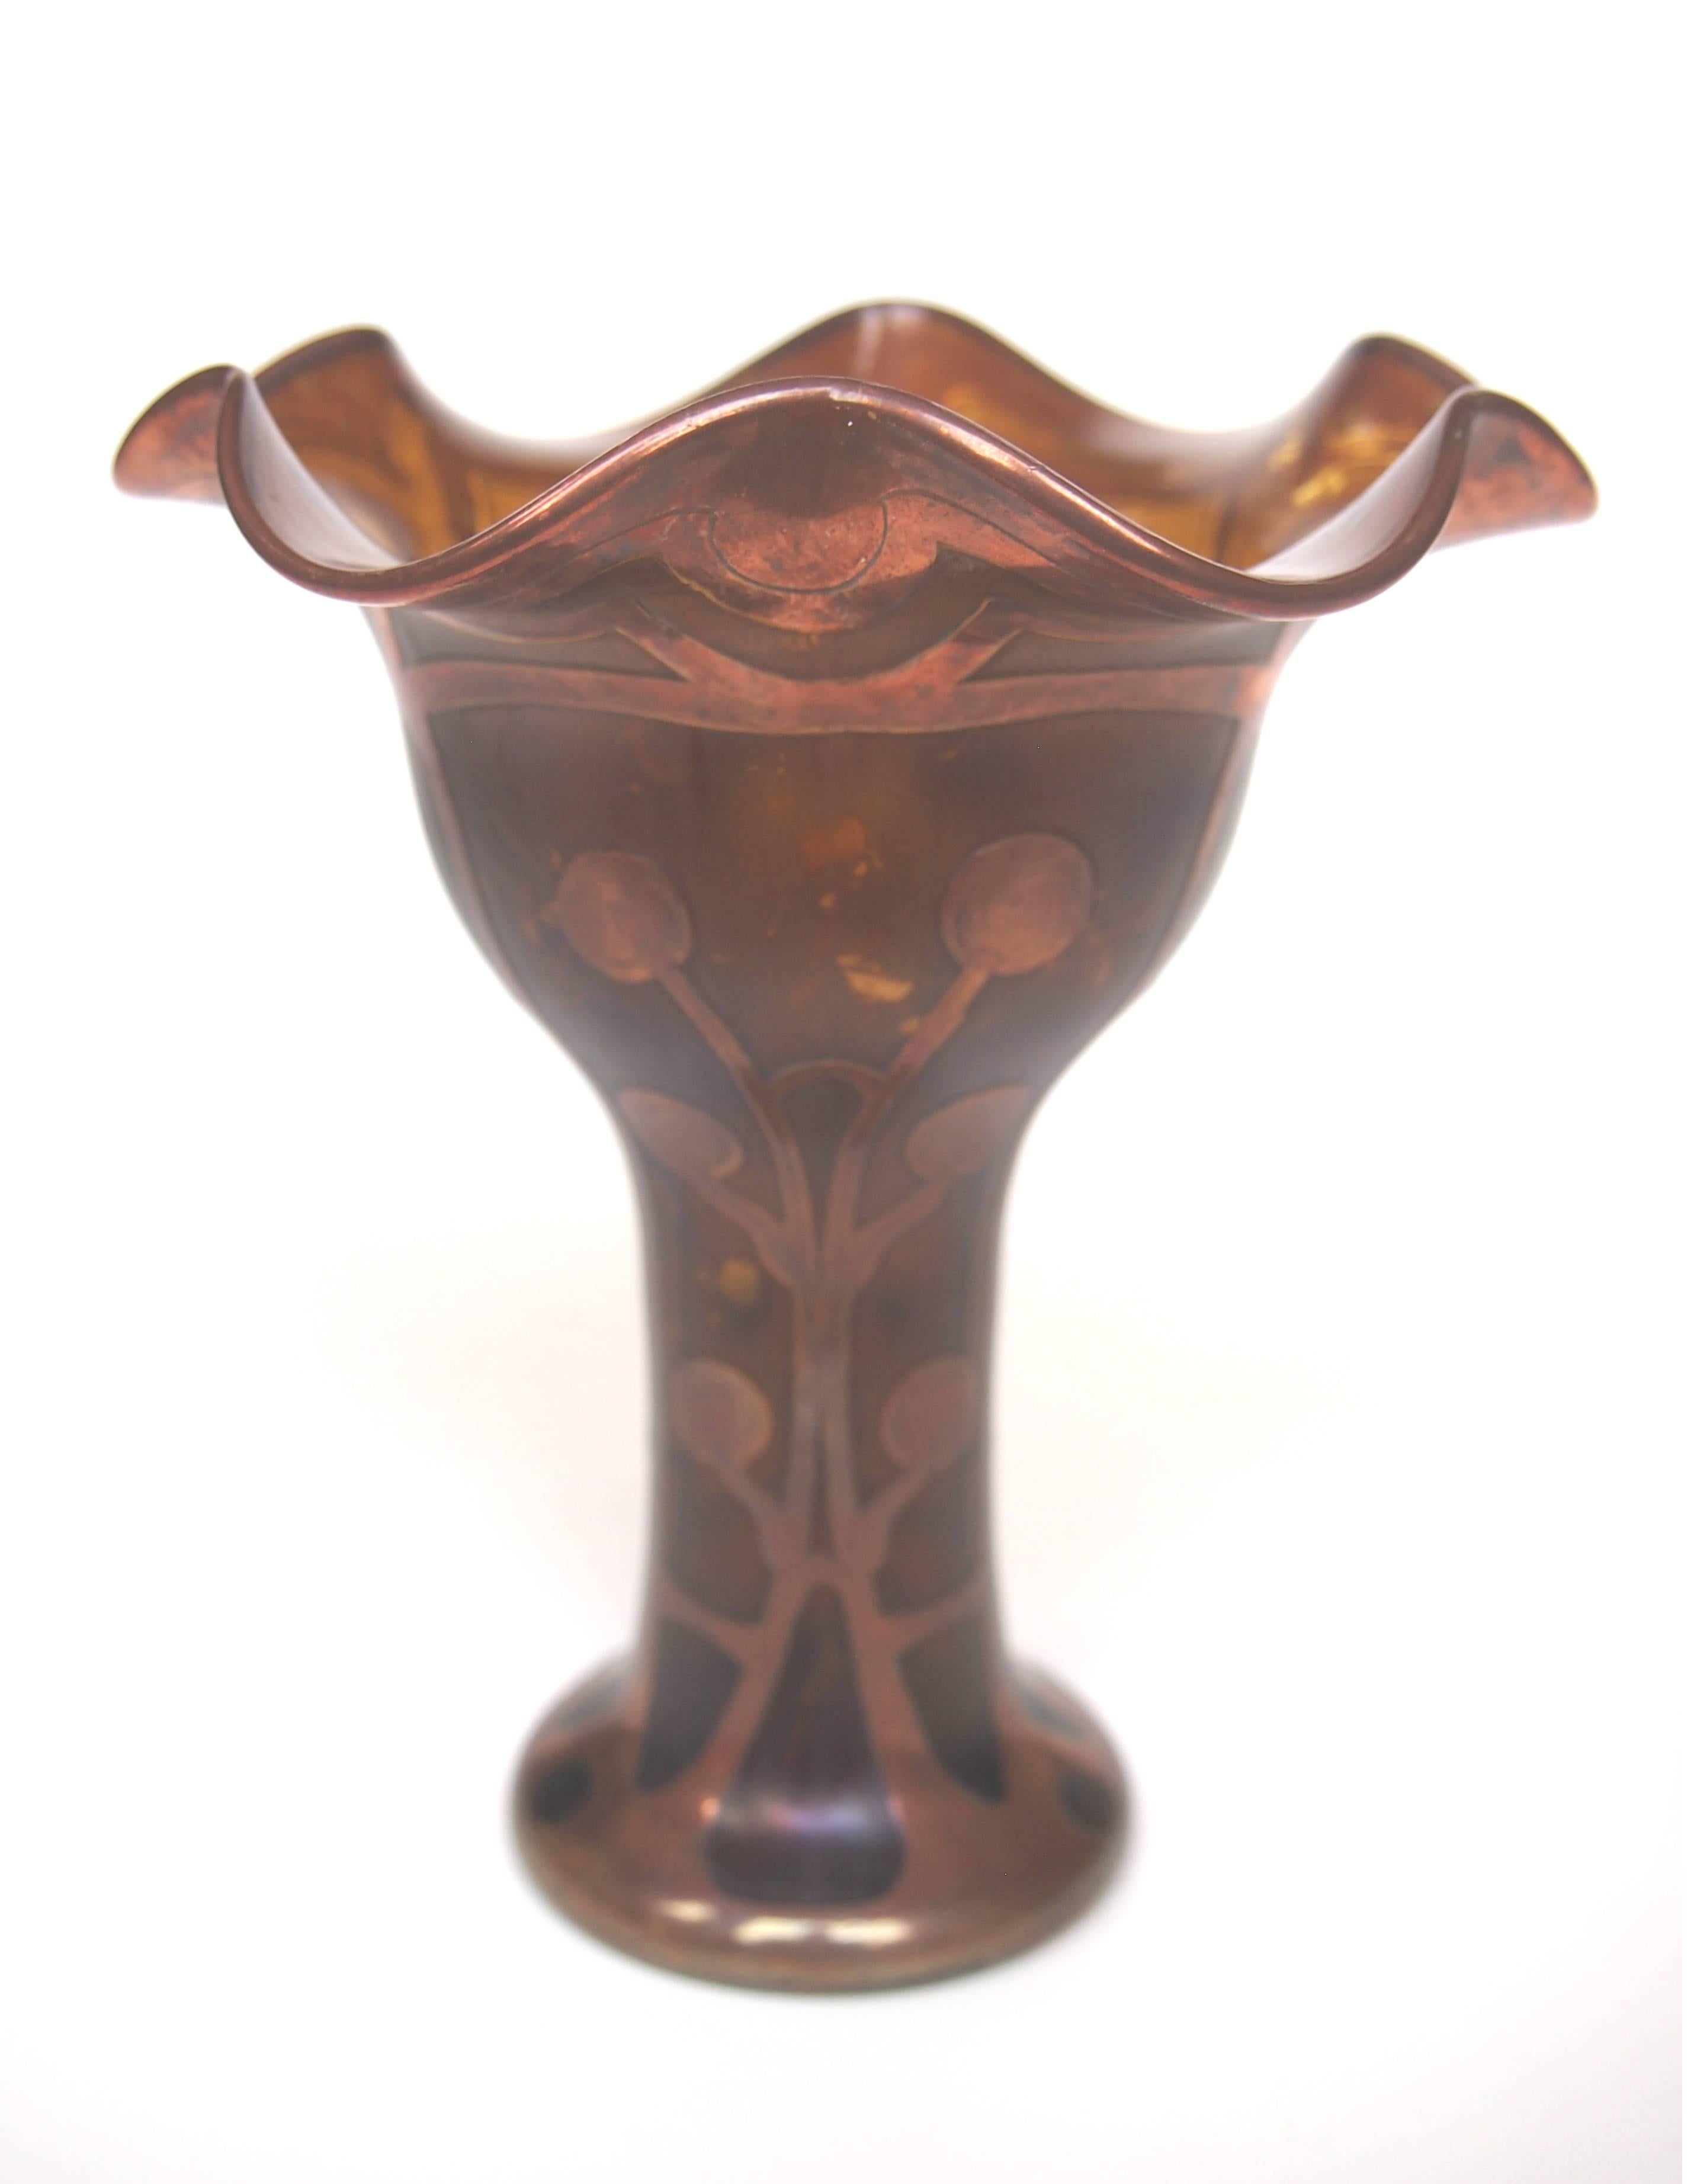 Czech Bohemian Jugendstil Copper Clad Carl Goldberg Glass Vase in Metalic Look Finish For Sale